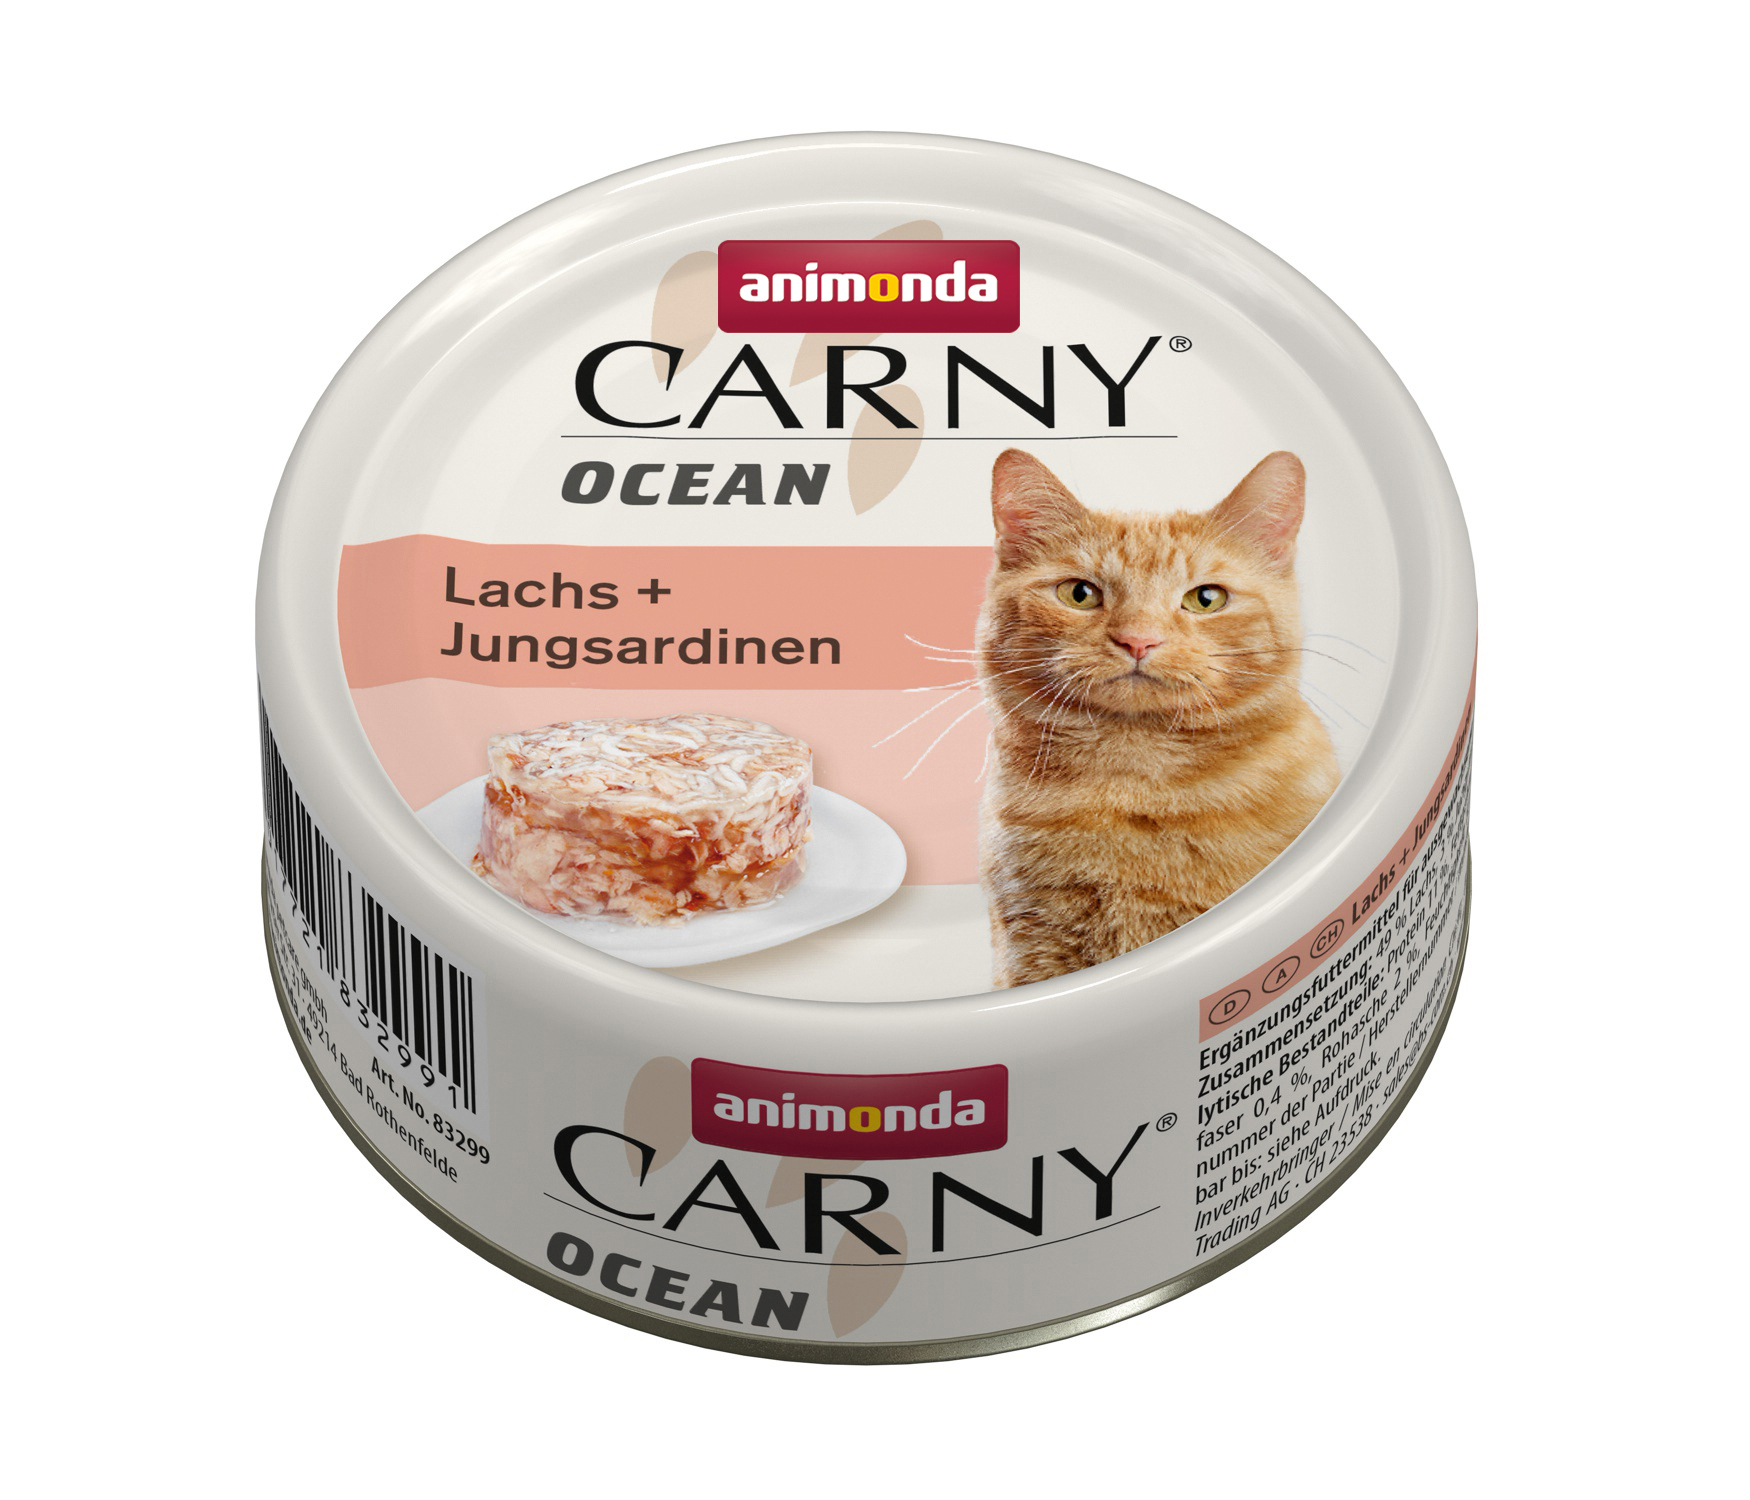 animonda petcare gmbh Cat Carny Adult Ocean 80g